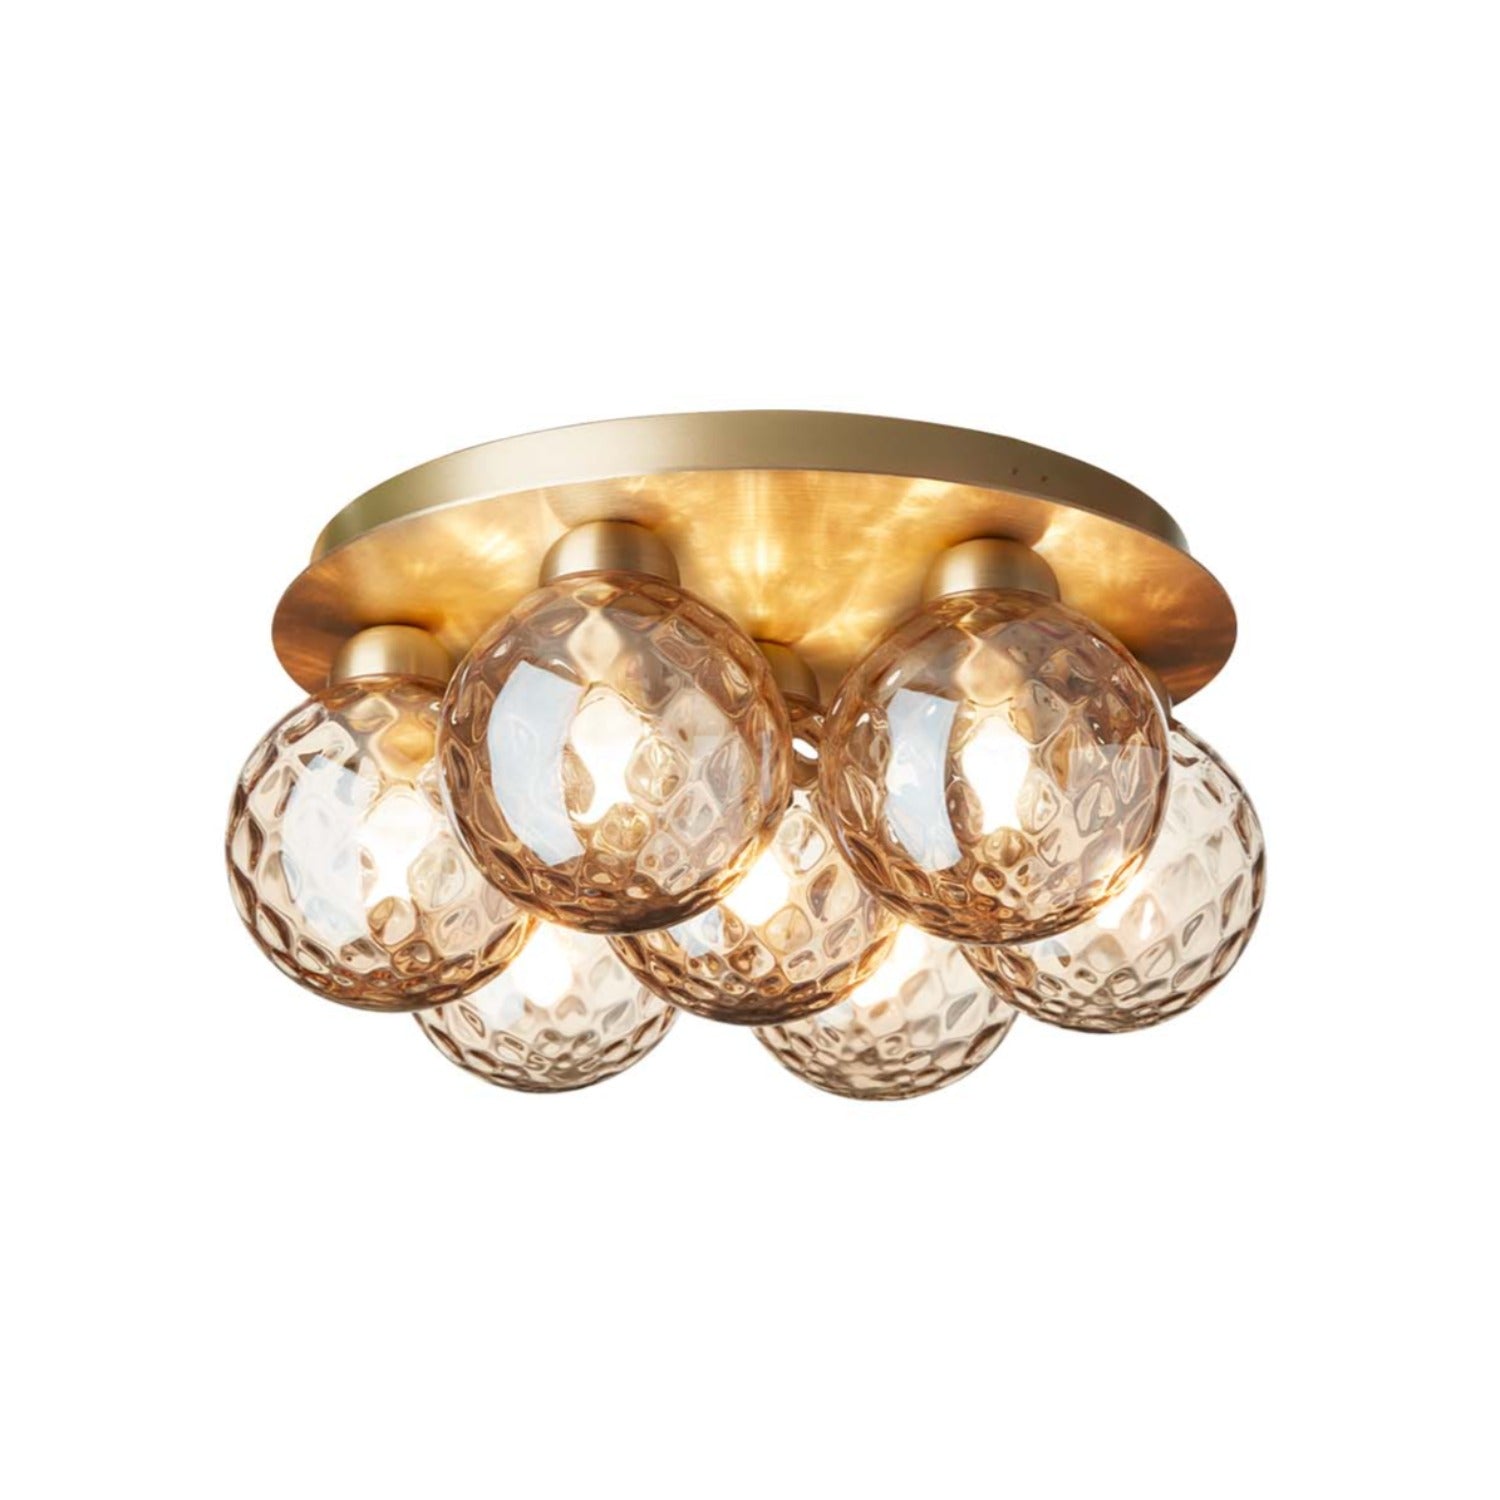 APIALES 7 - Vintage style golden glass ceiling light